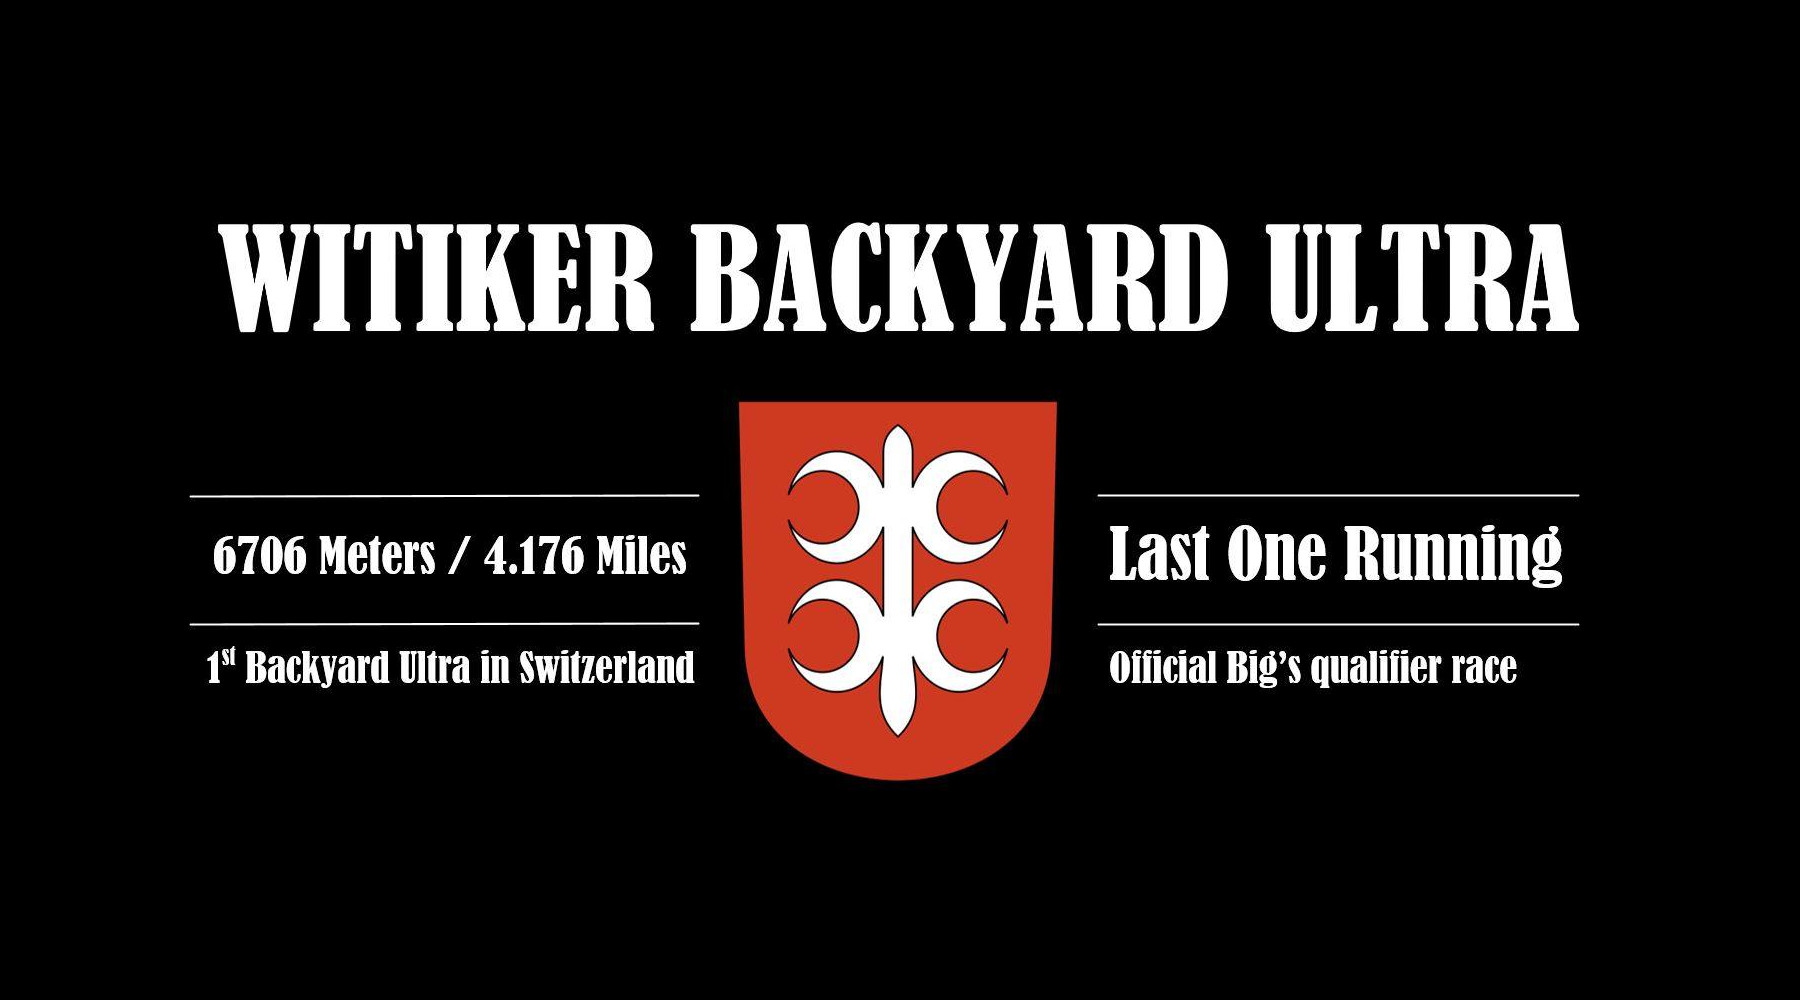 witiker-backyard-ultra